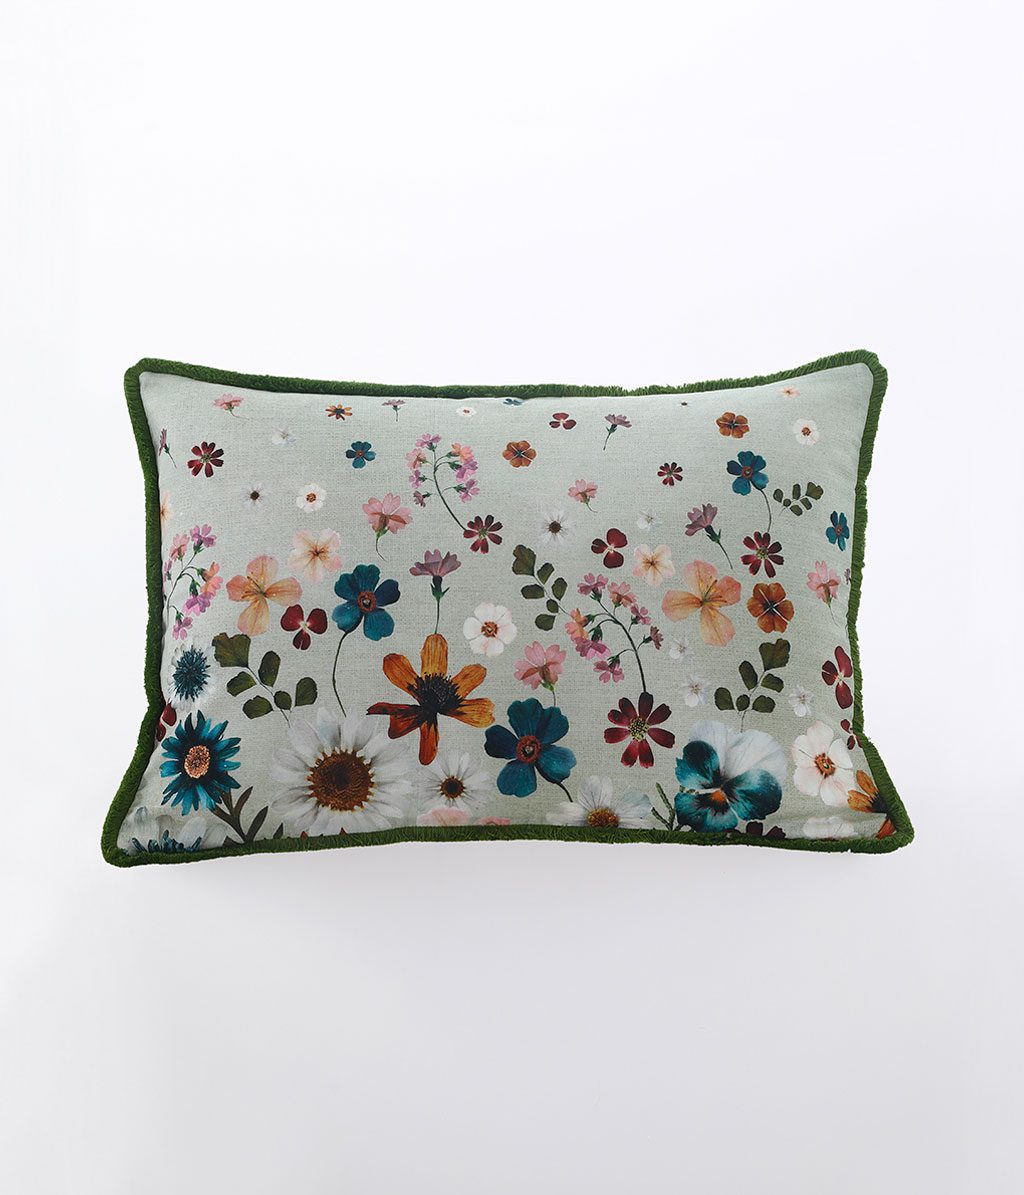 Flowerbed Cushion